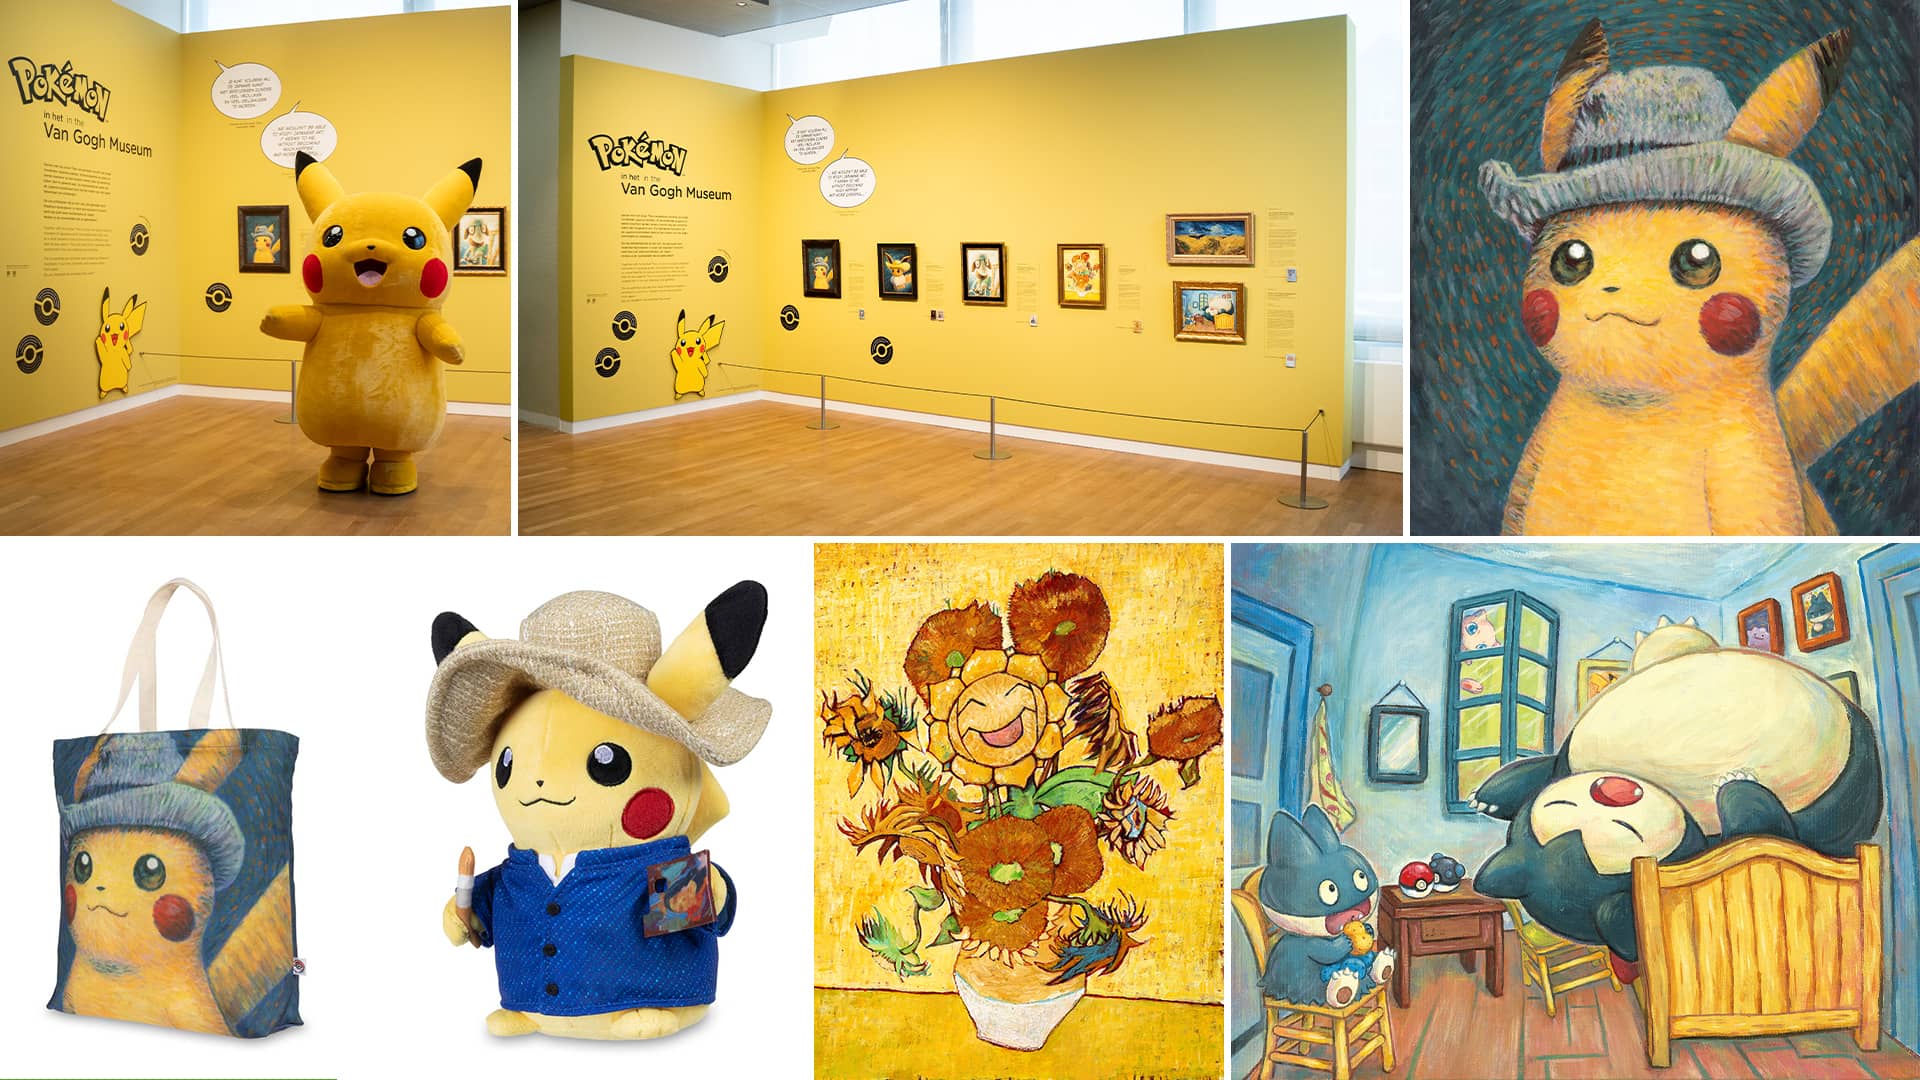 Pokémon at the Van Gogh Museum - Van Gogh Museum